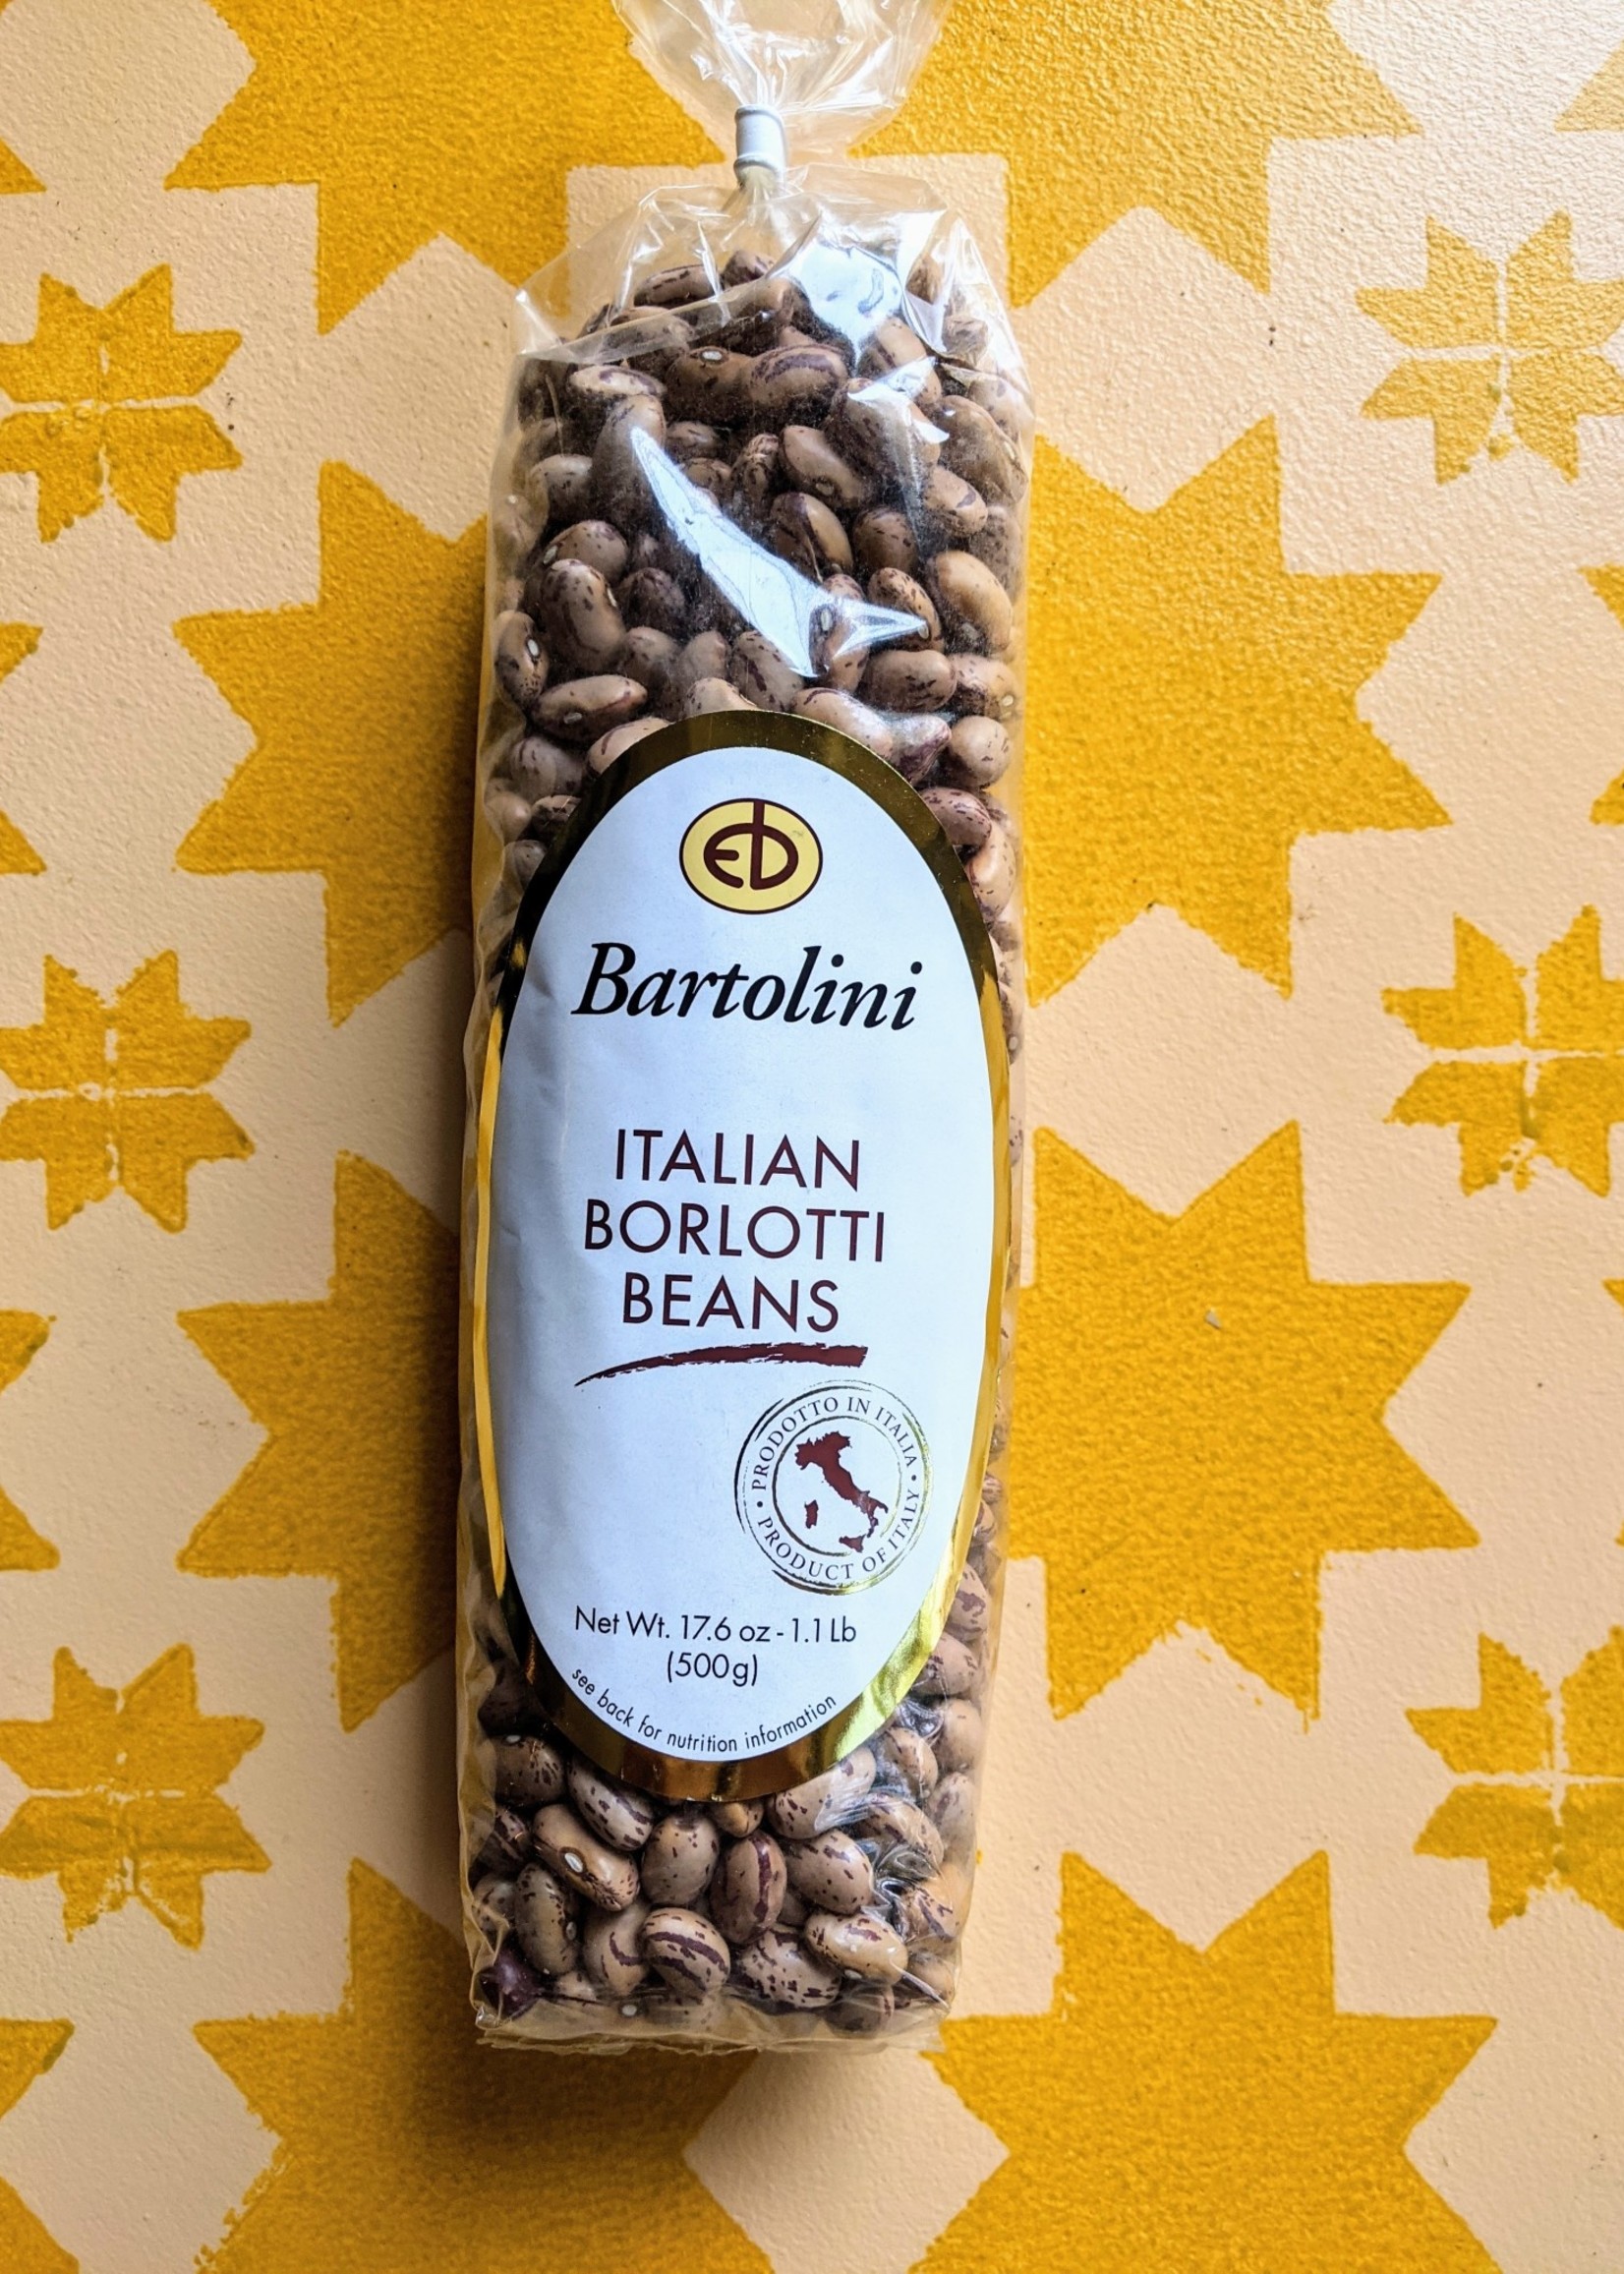 Bartolini Borlotti Beans